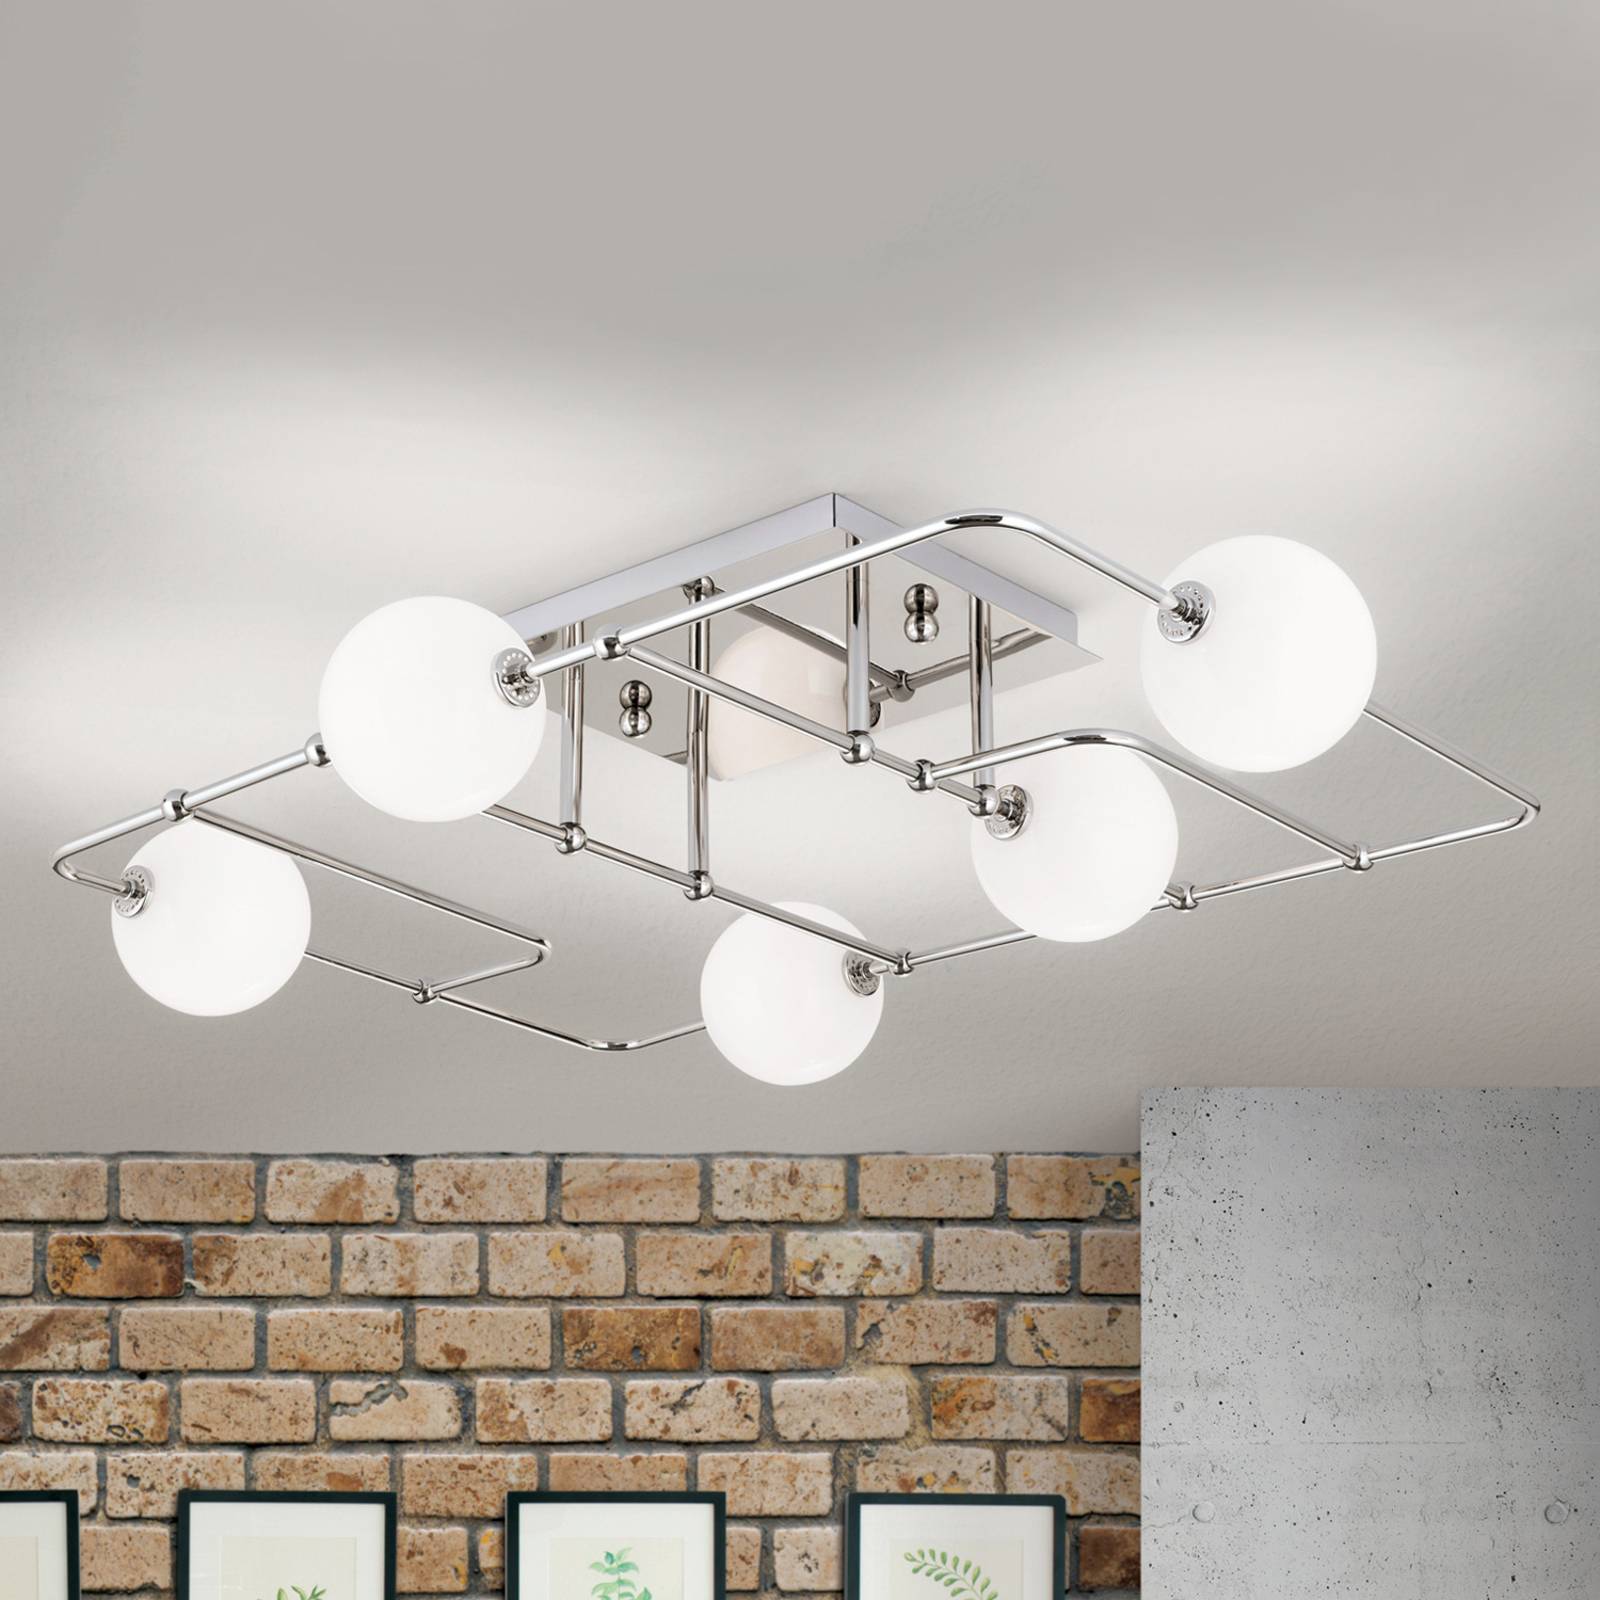 Pipes LED ceiling light, 5 glass balls, nickel